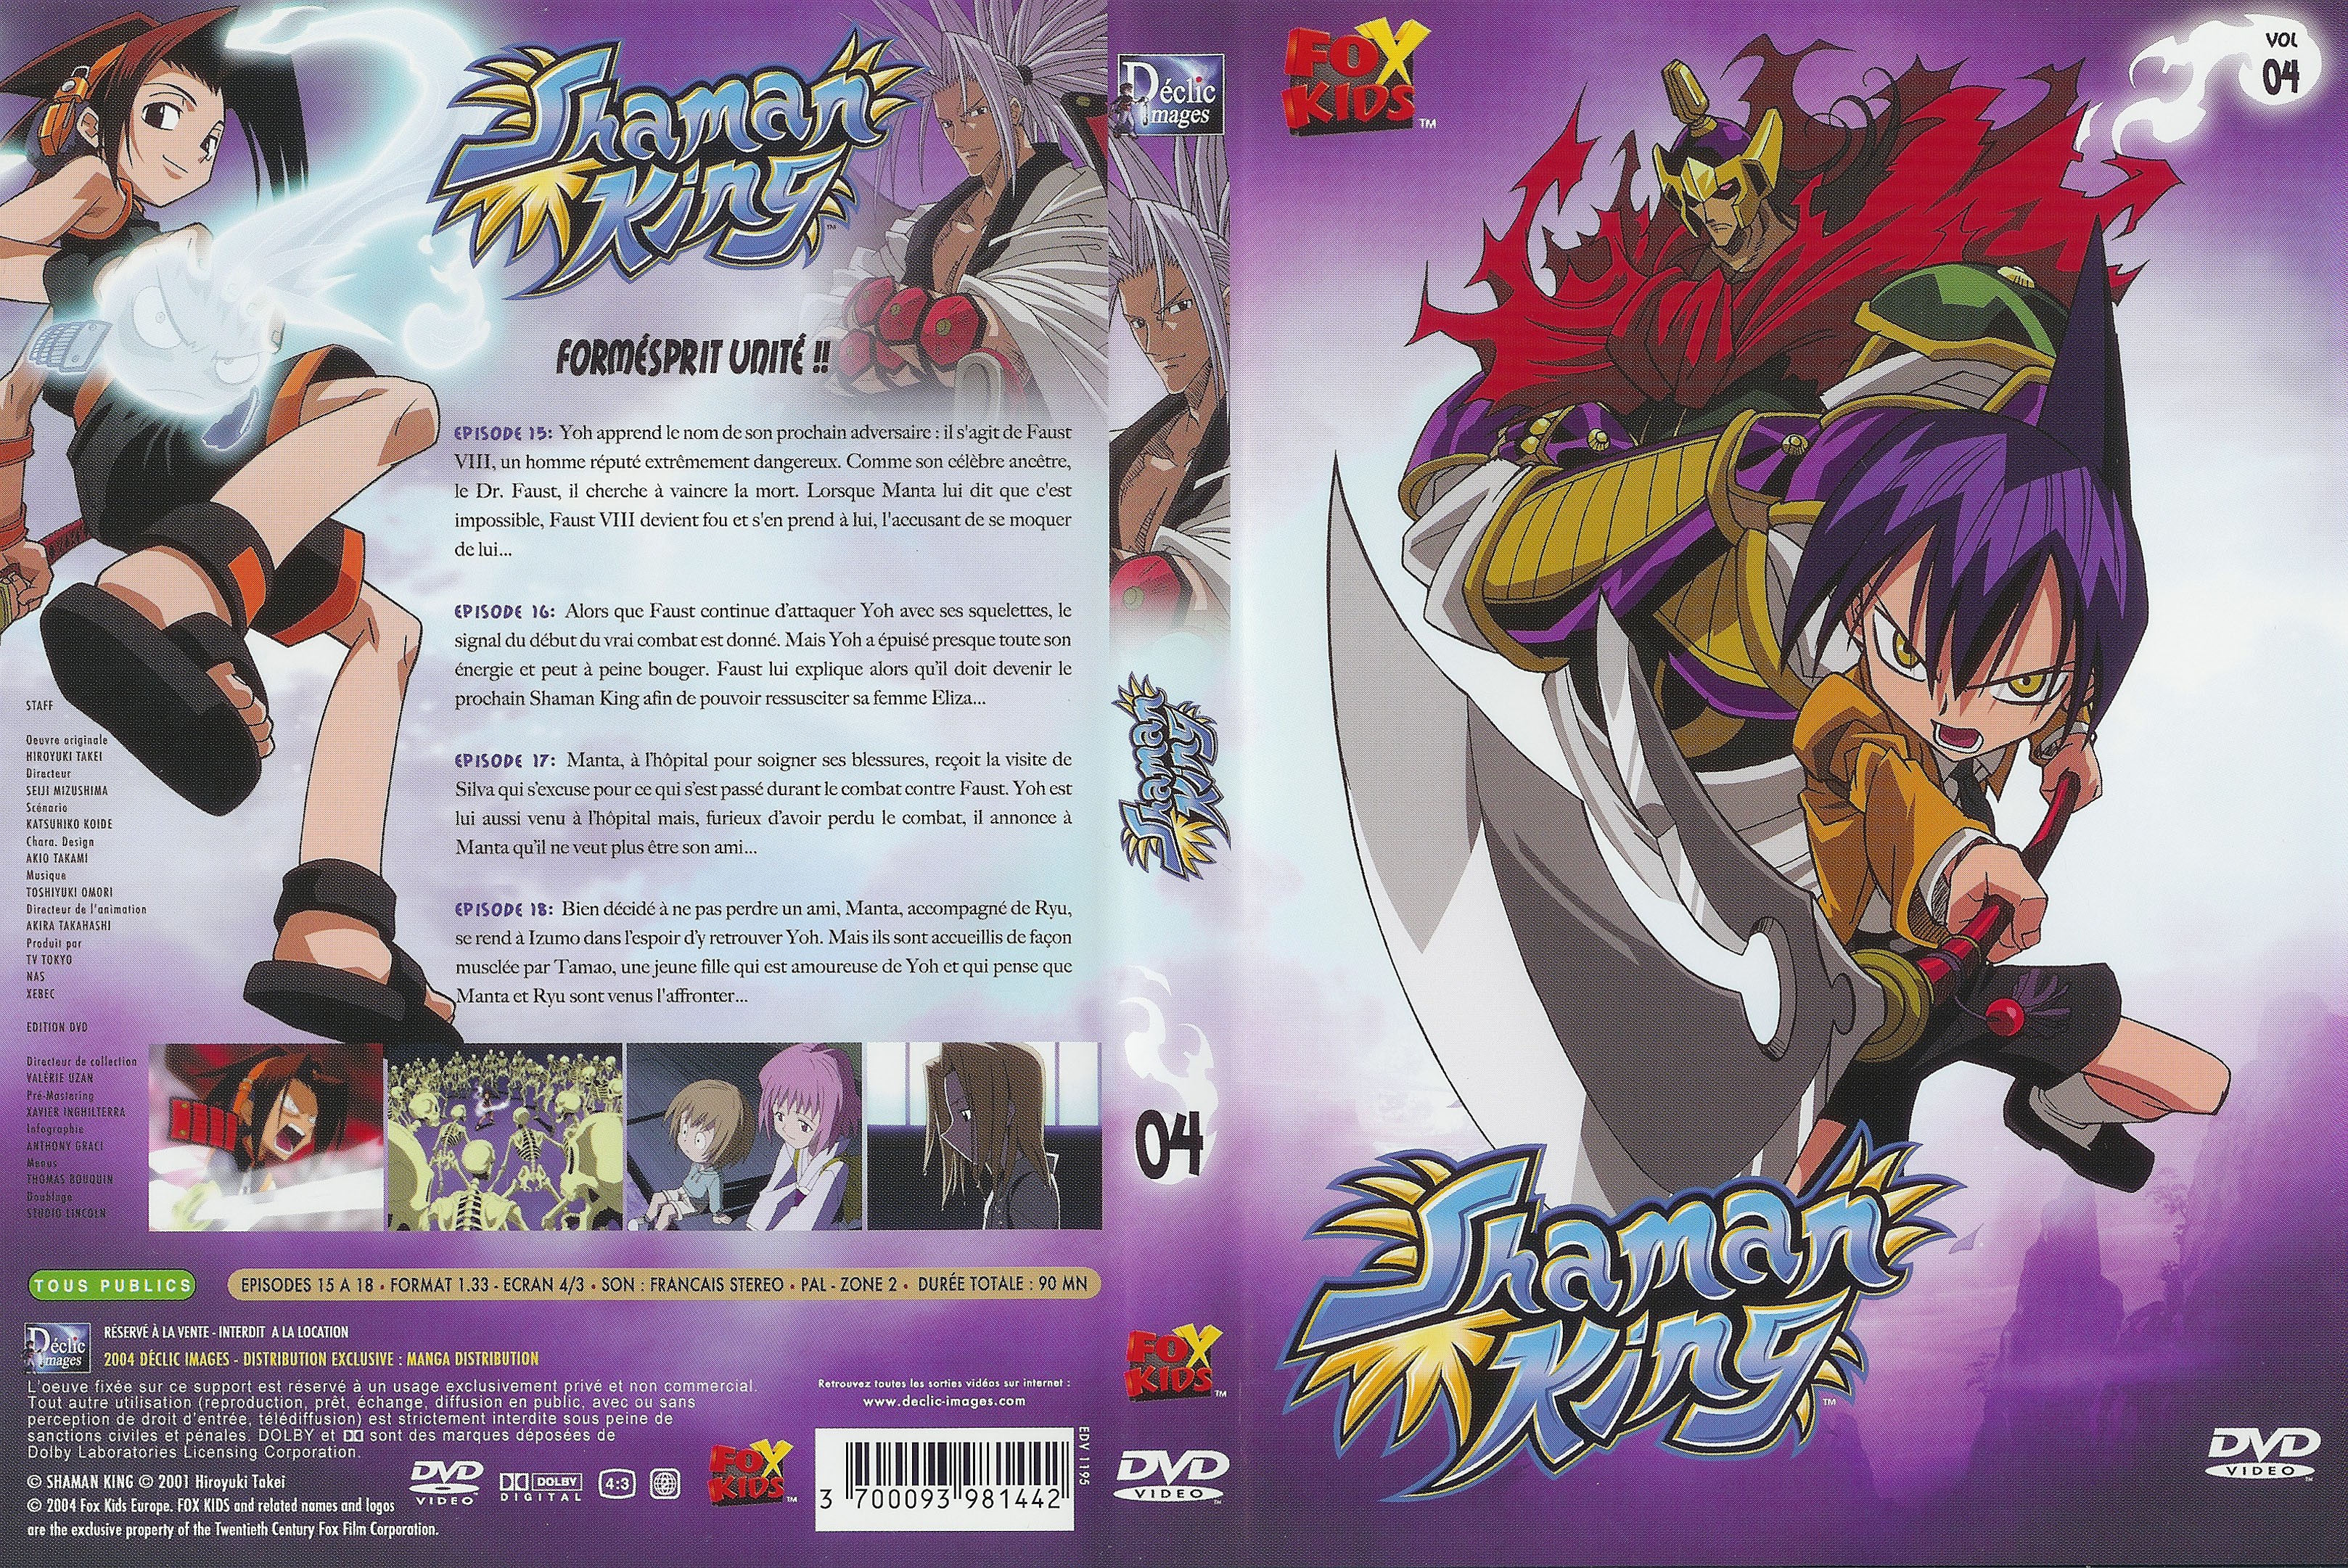 Jaquette DVD Shaman king vol 04